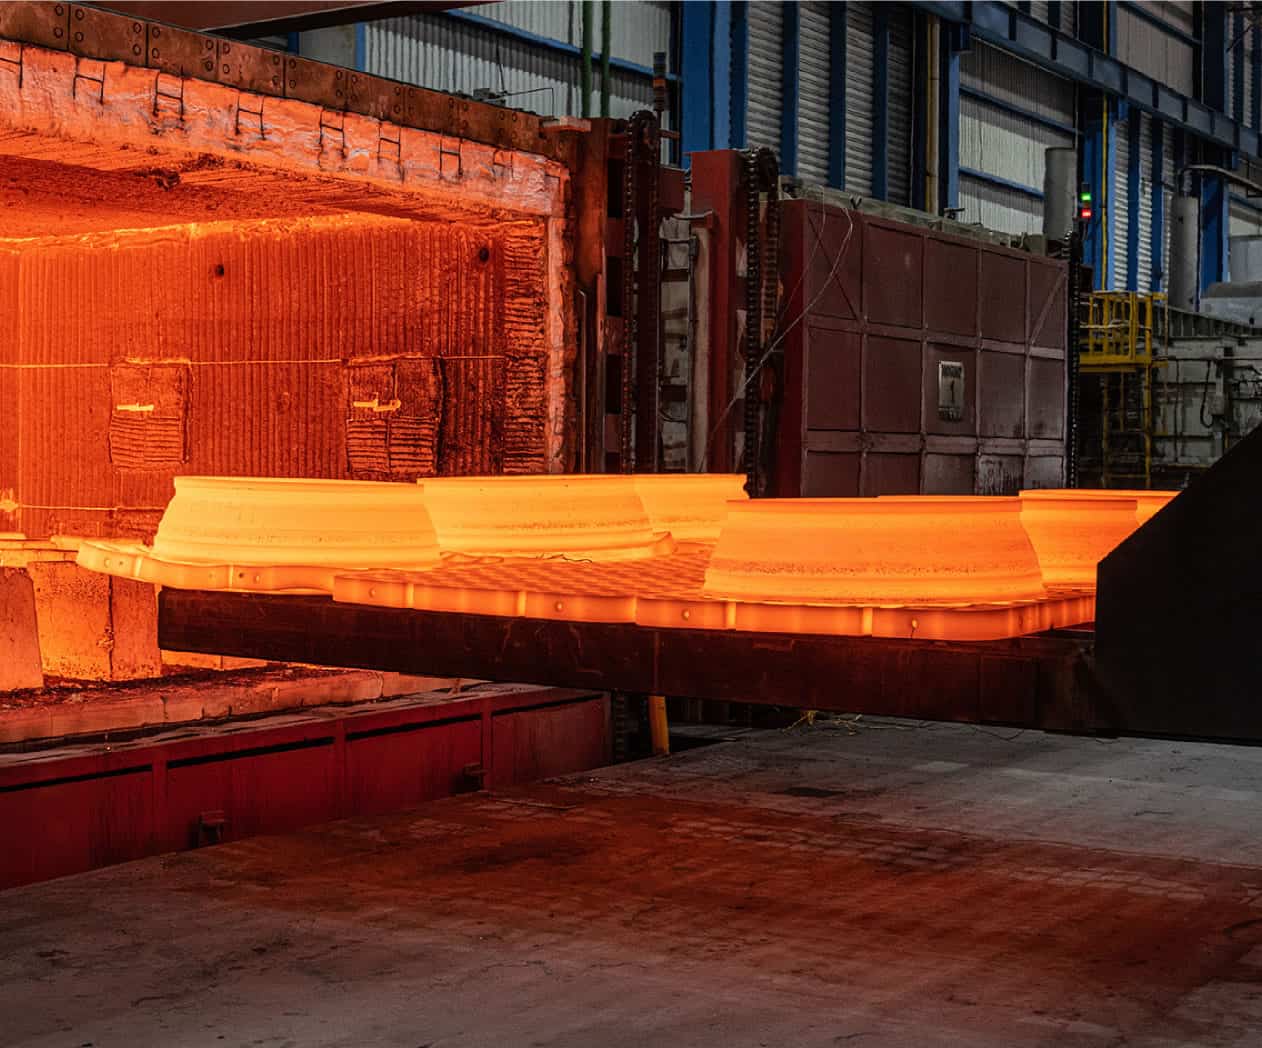 Glowing hot steel slabs exiting an industrial furnace in a steel mill.